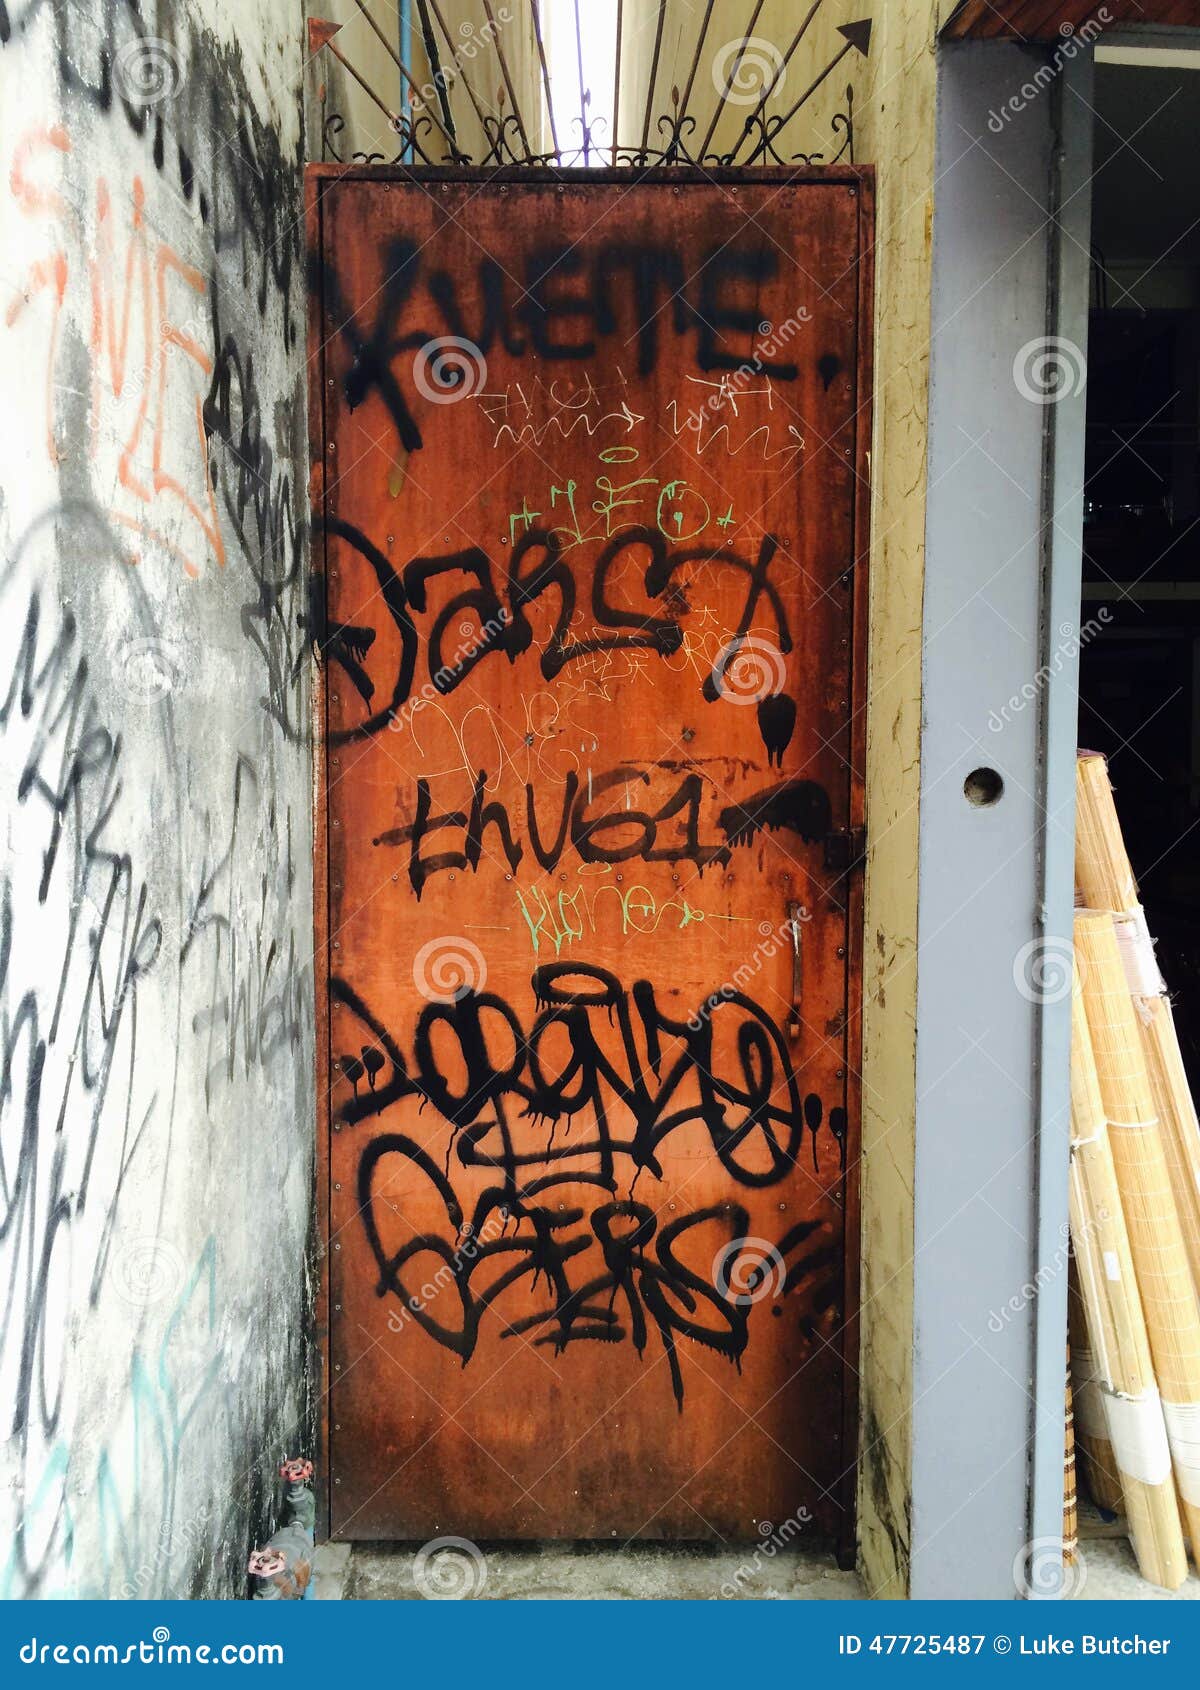 Graffiti Door stock image. Image of thug, grunge, arts - 47725487